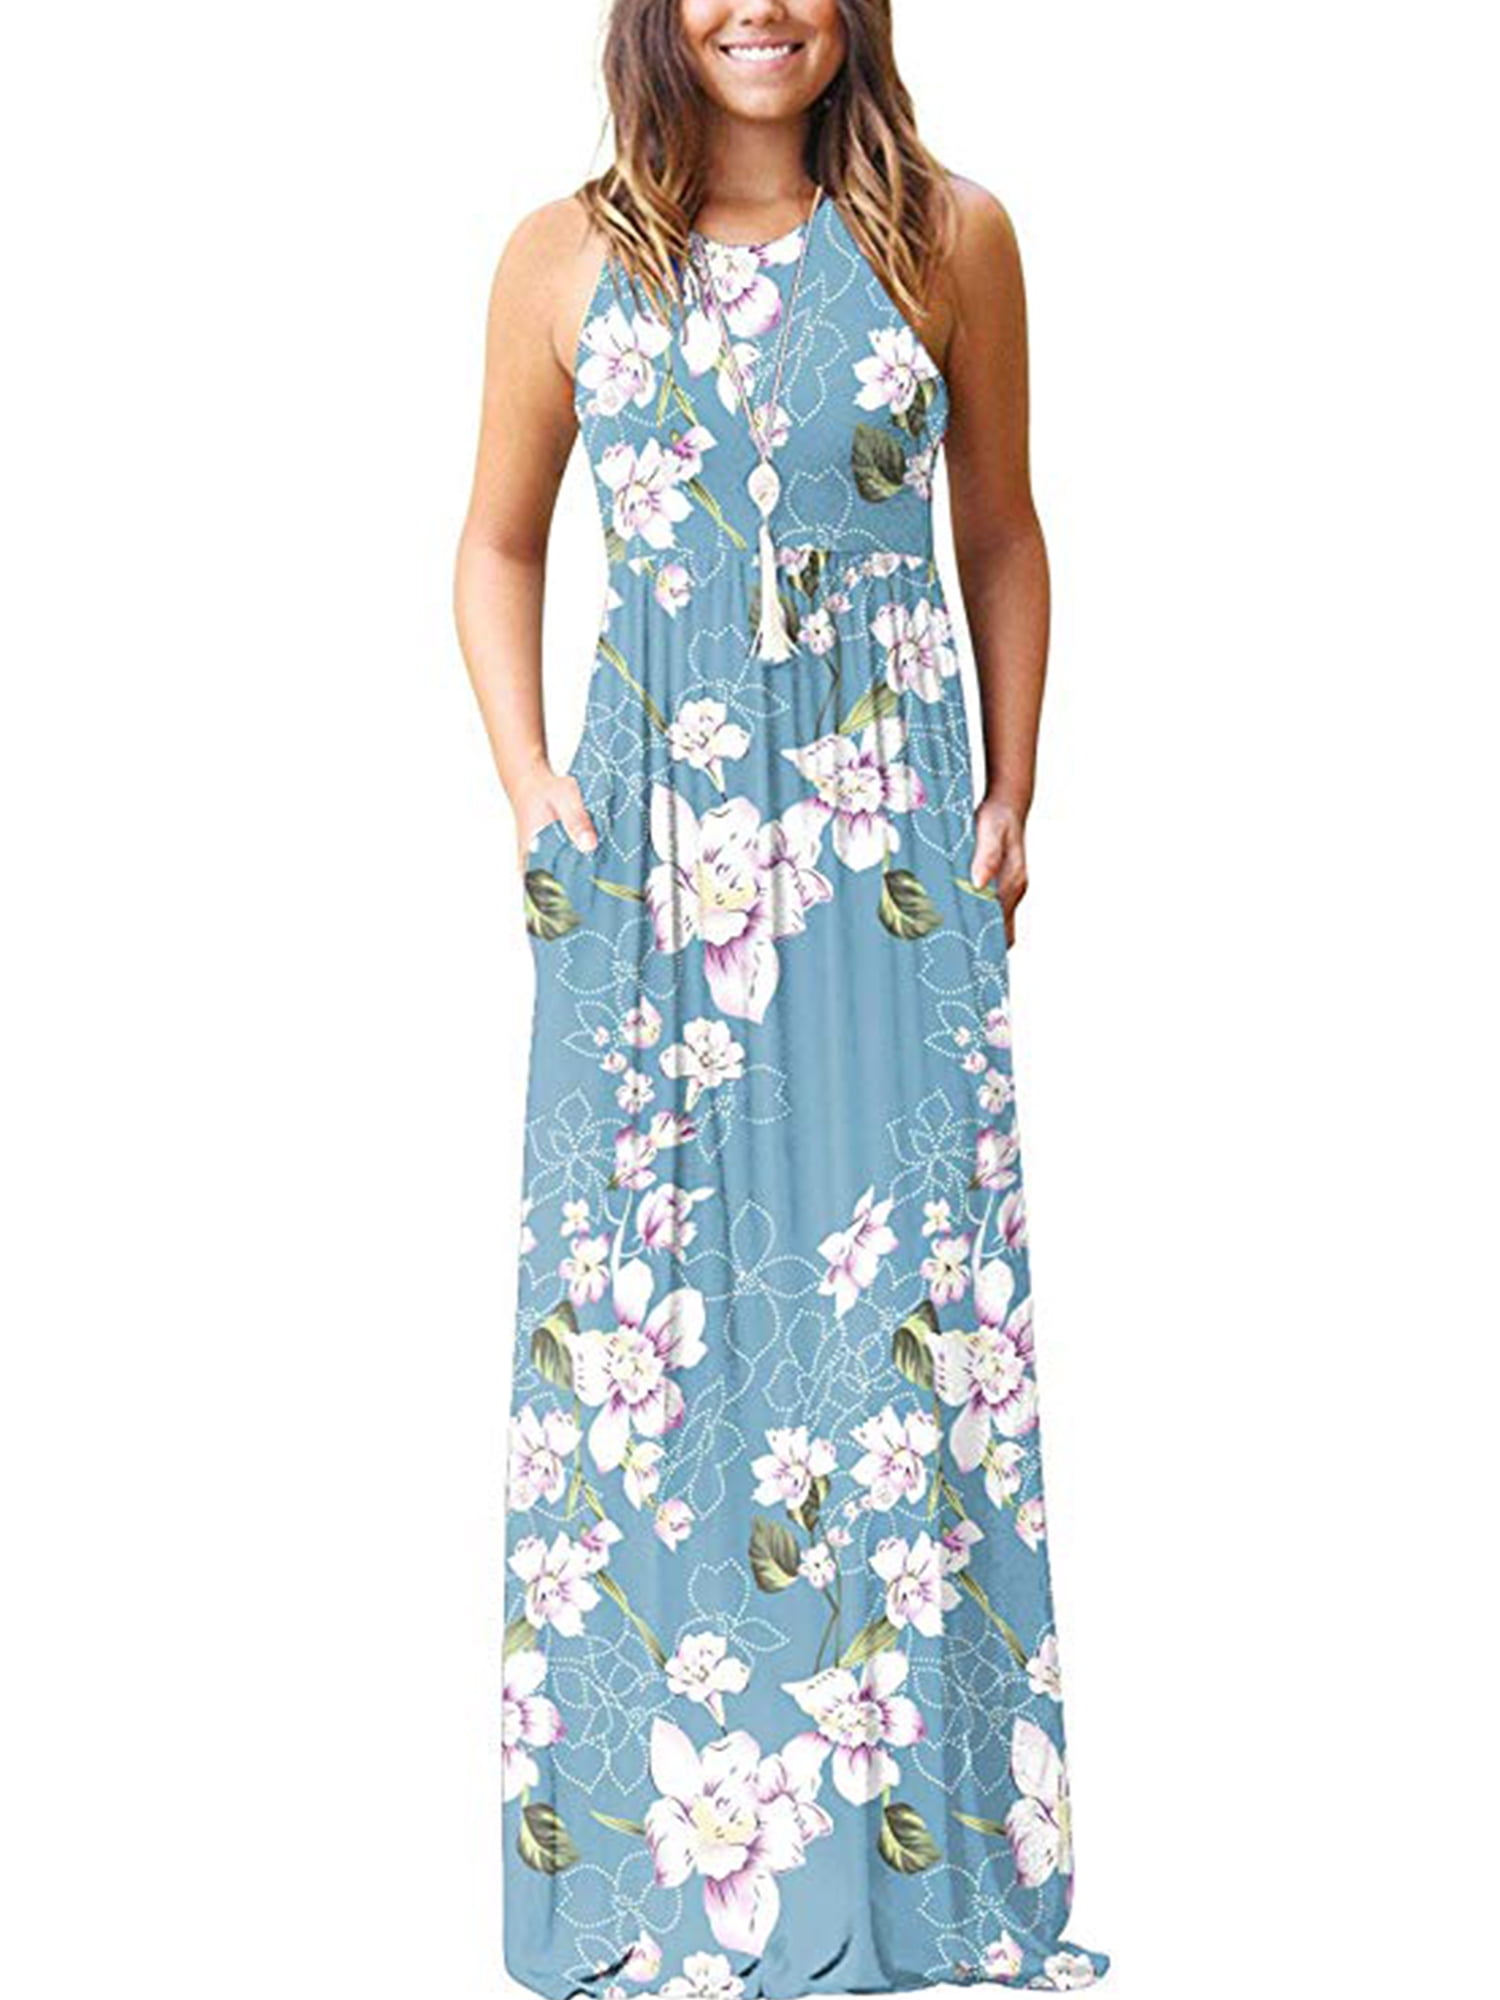 Dress for Women 2021 Sleeveless Pockets Womens Casual Floral Sundress Maxi Long Dress Beach Party Tunic Tank 